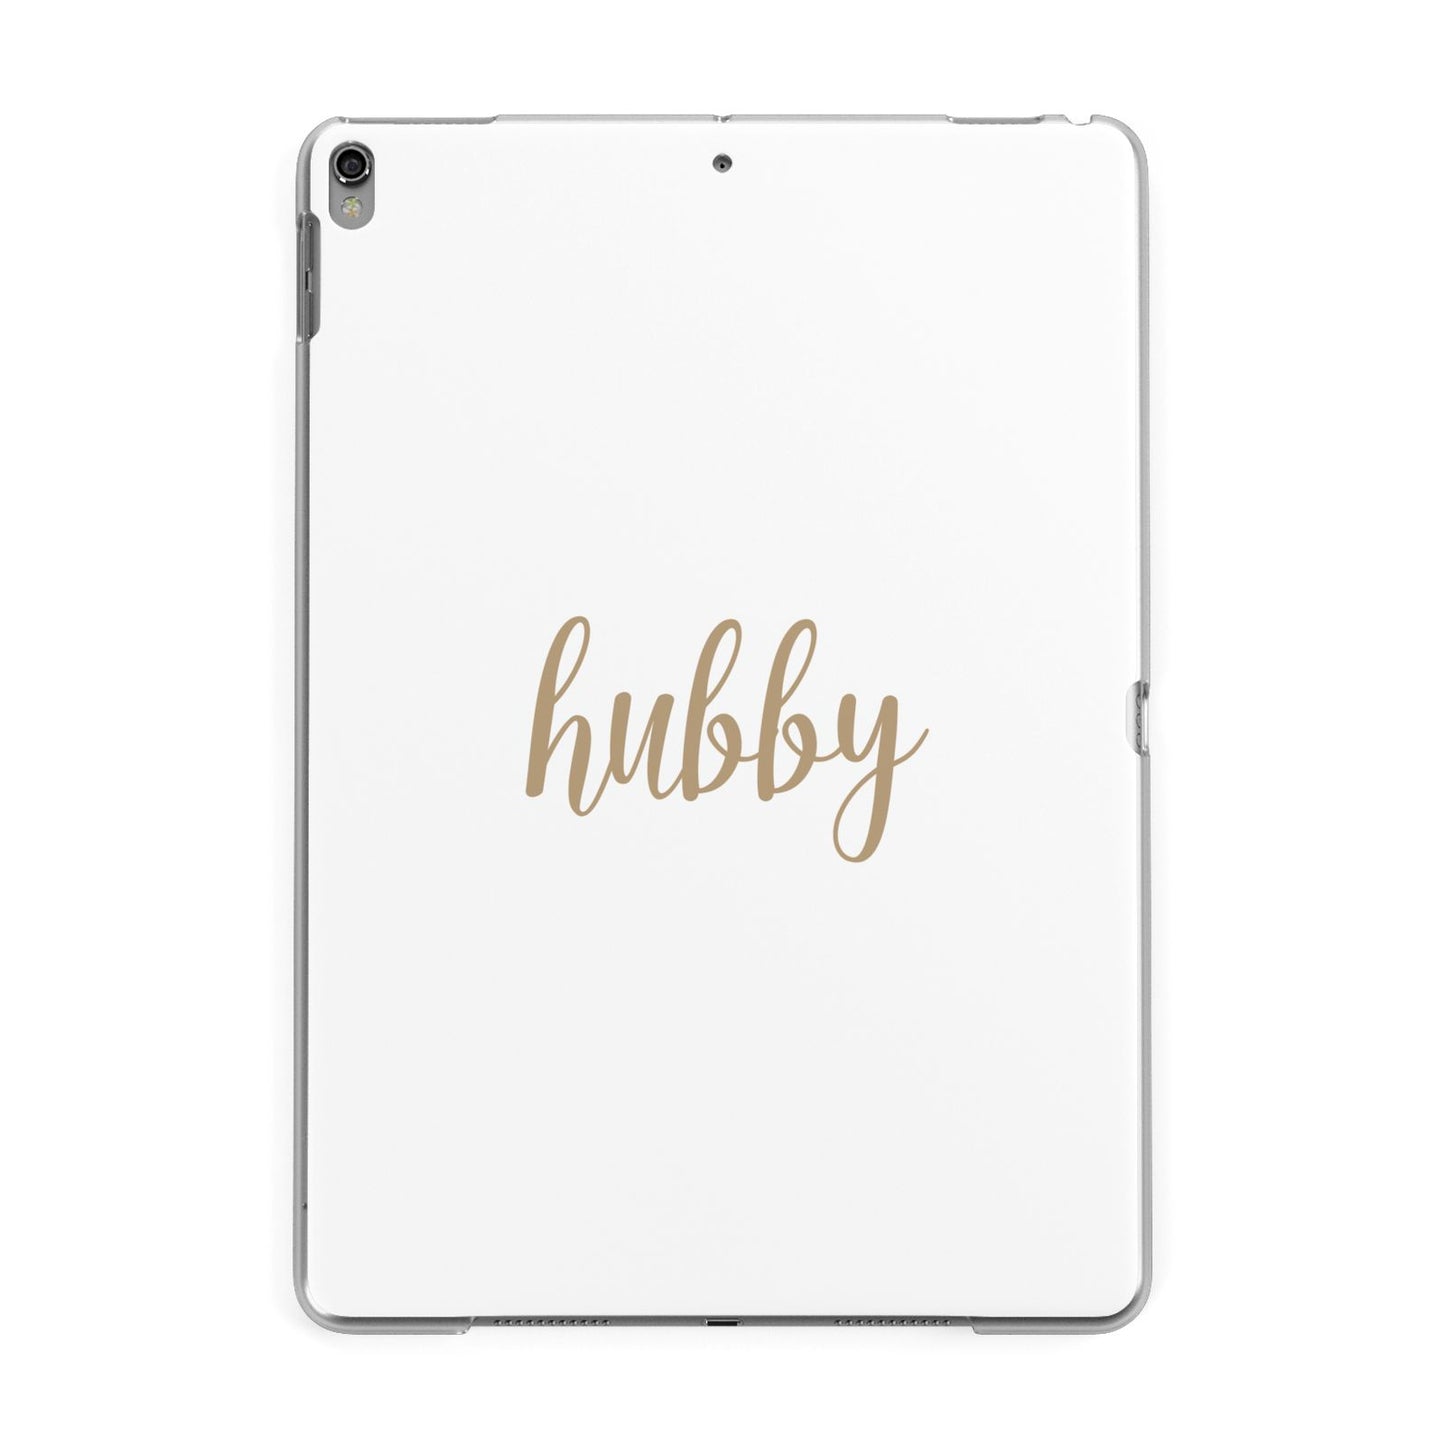 Hubby Apple iPad Grey Case